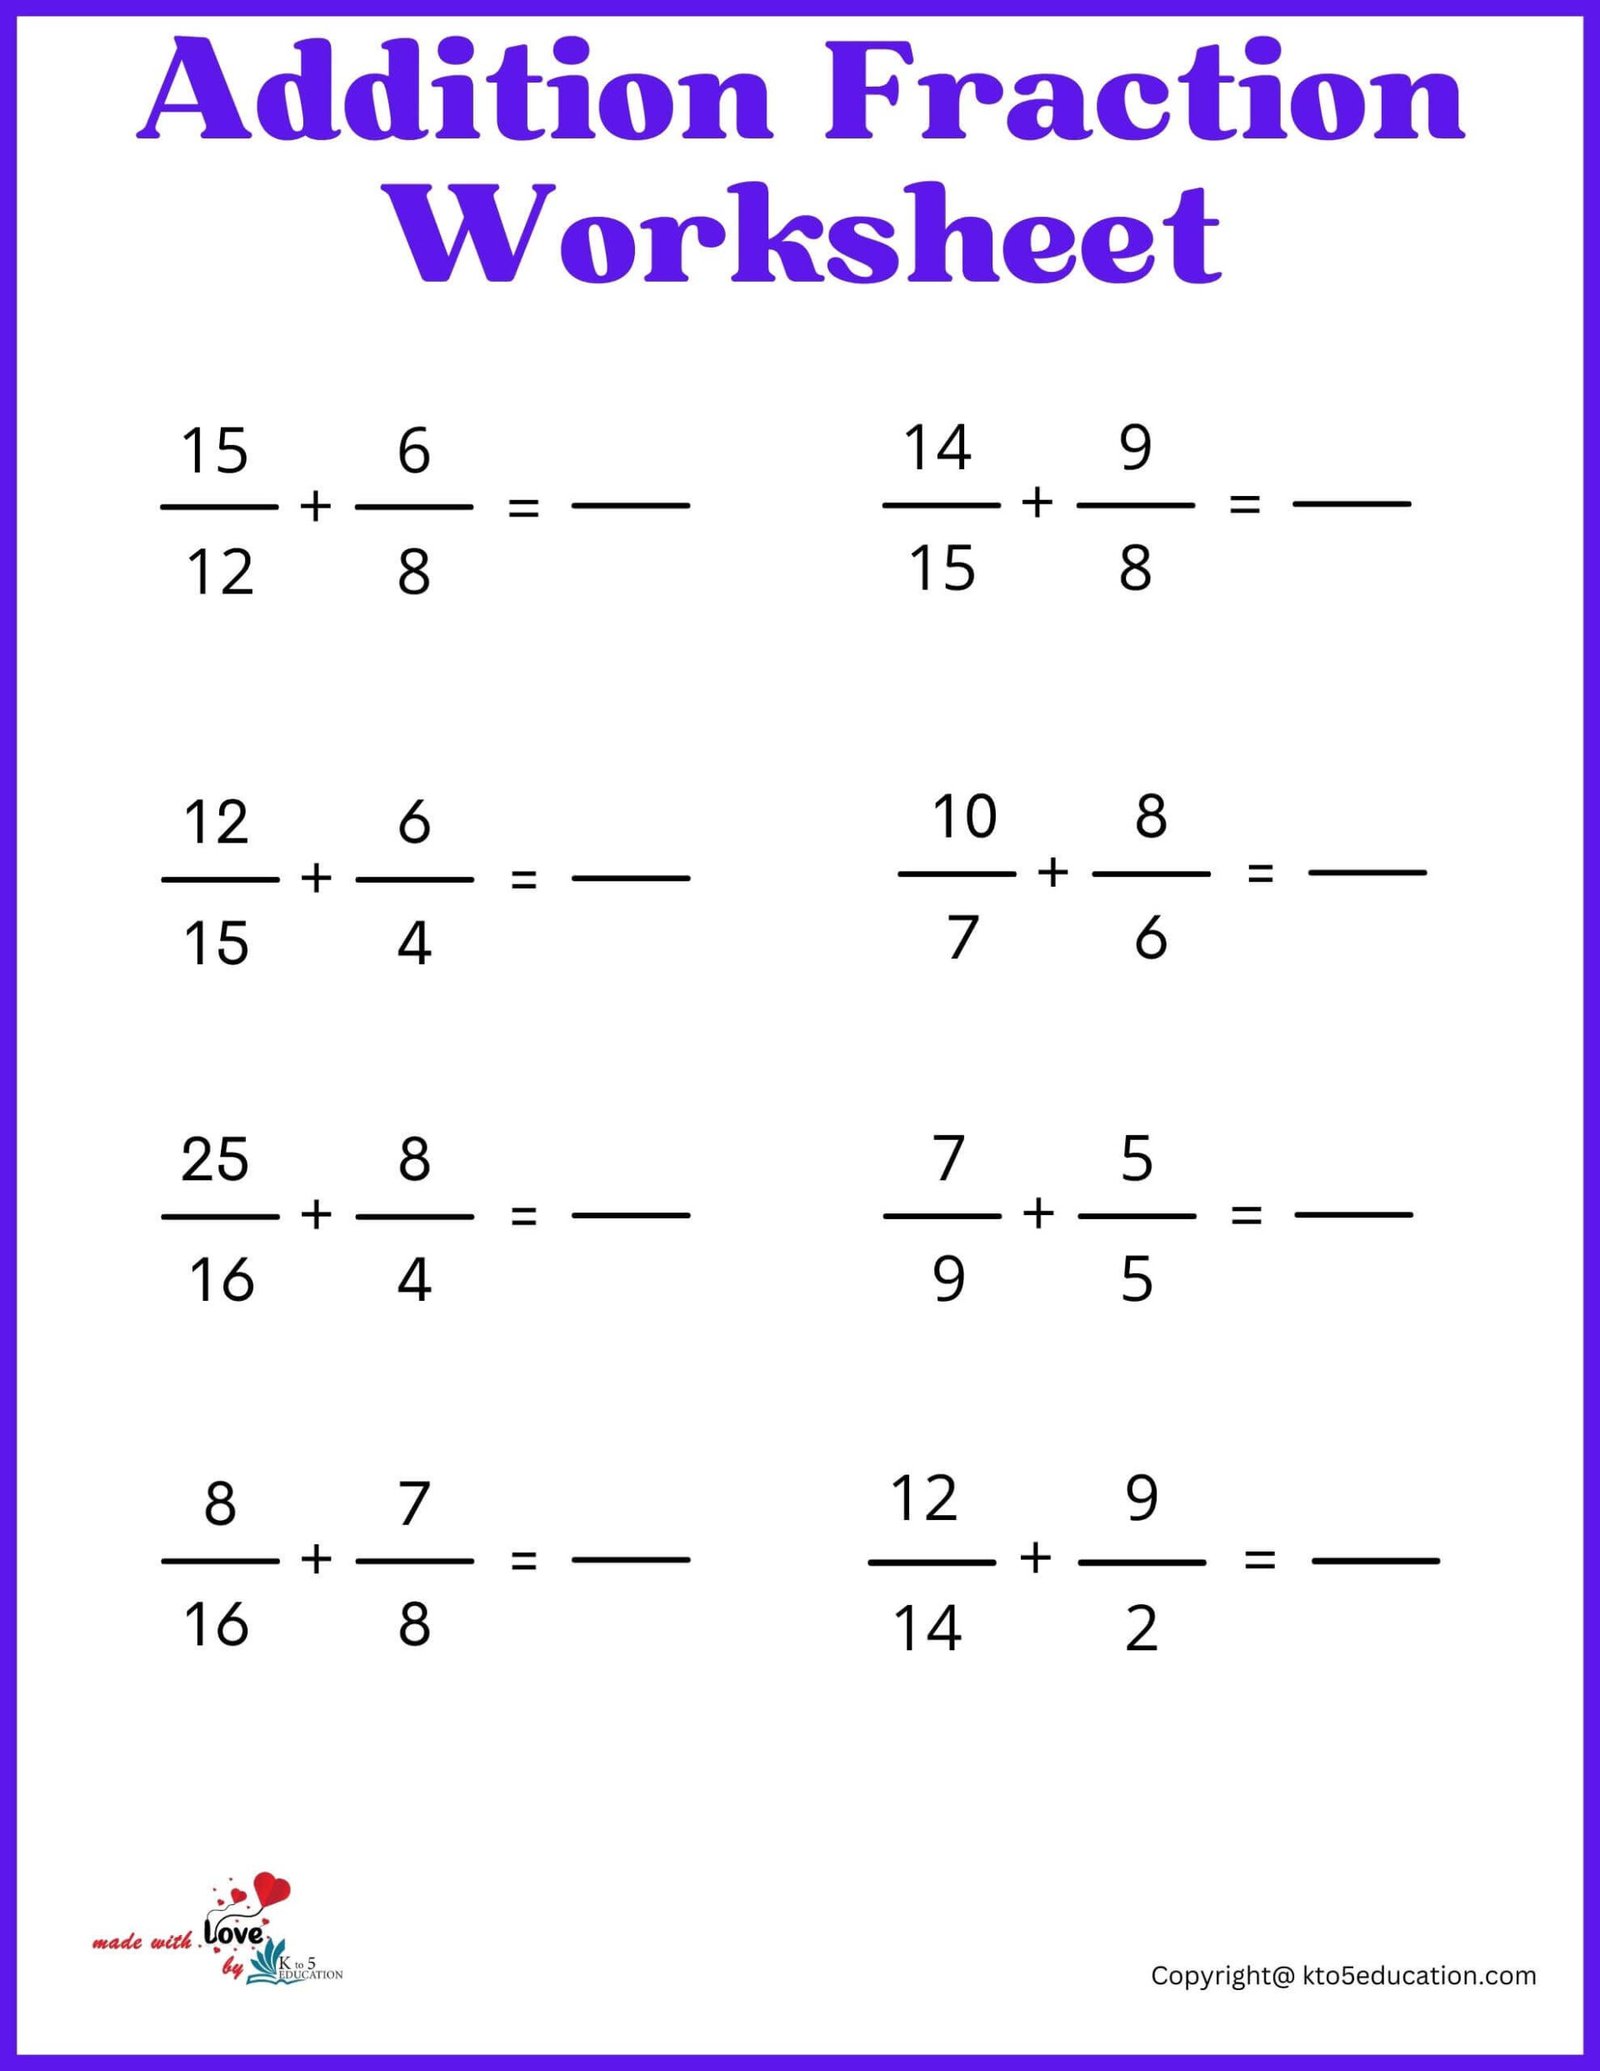 addition-fraction-worksheet-for-4th-grade-free-download